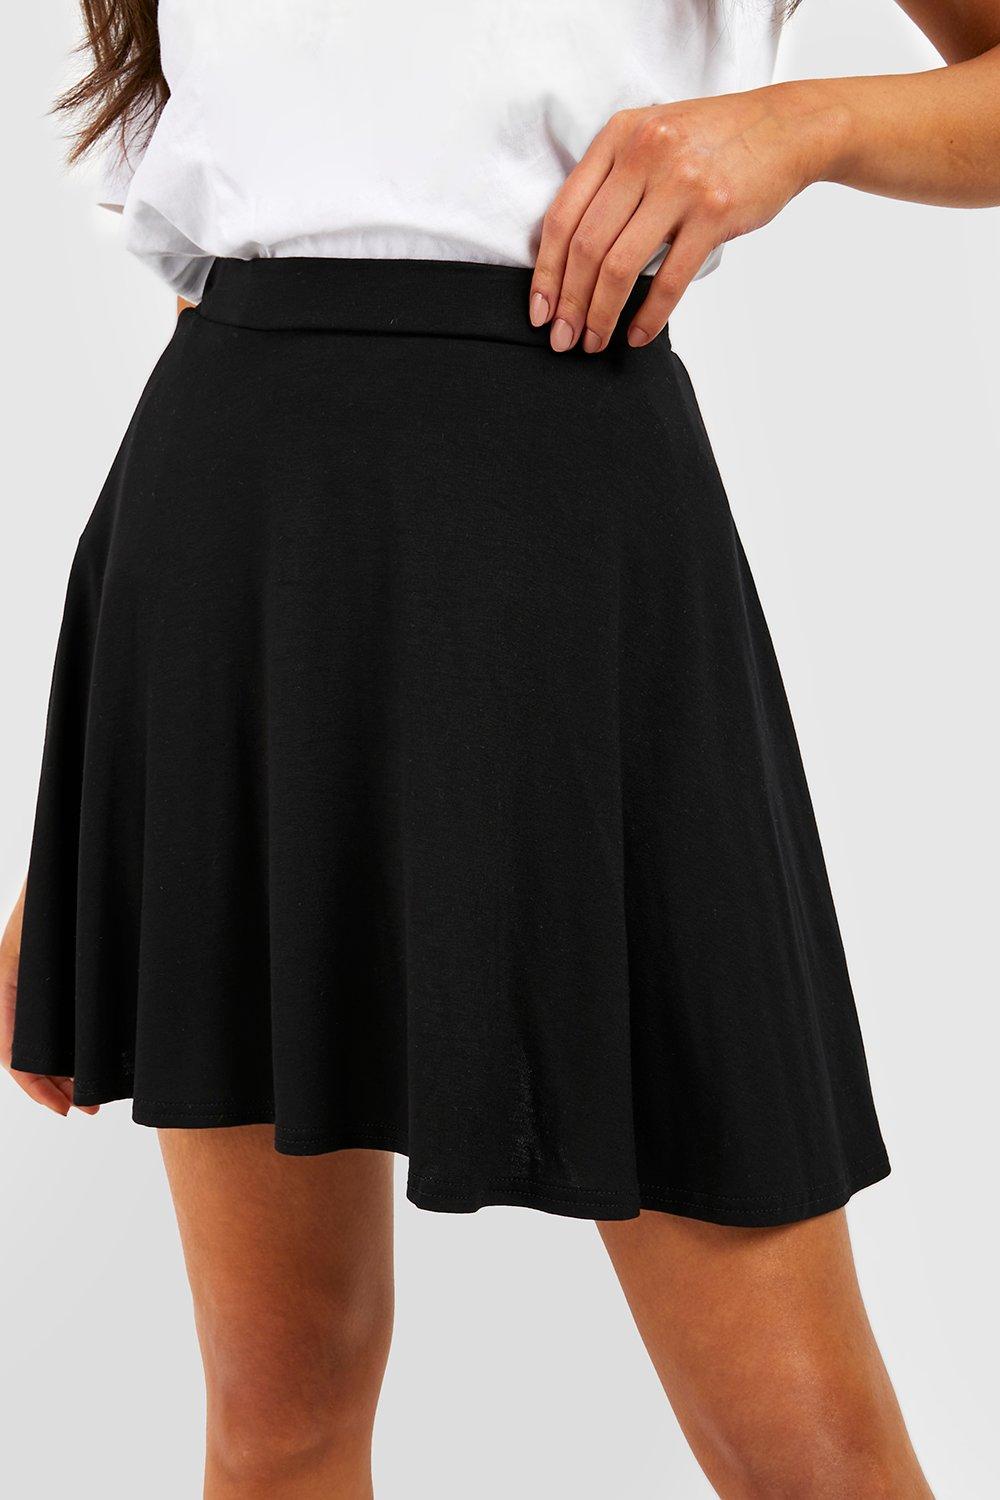 https://media.boohoo.com/i/boohoo/gzz34406_black_xl_3/female-black-basic-solid-black-high-waisted-flippy-skirt